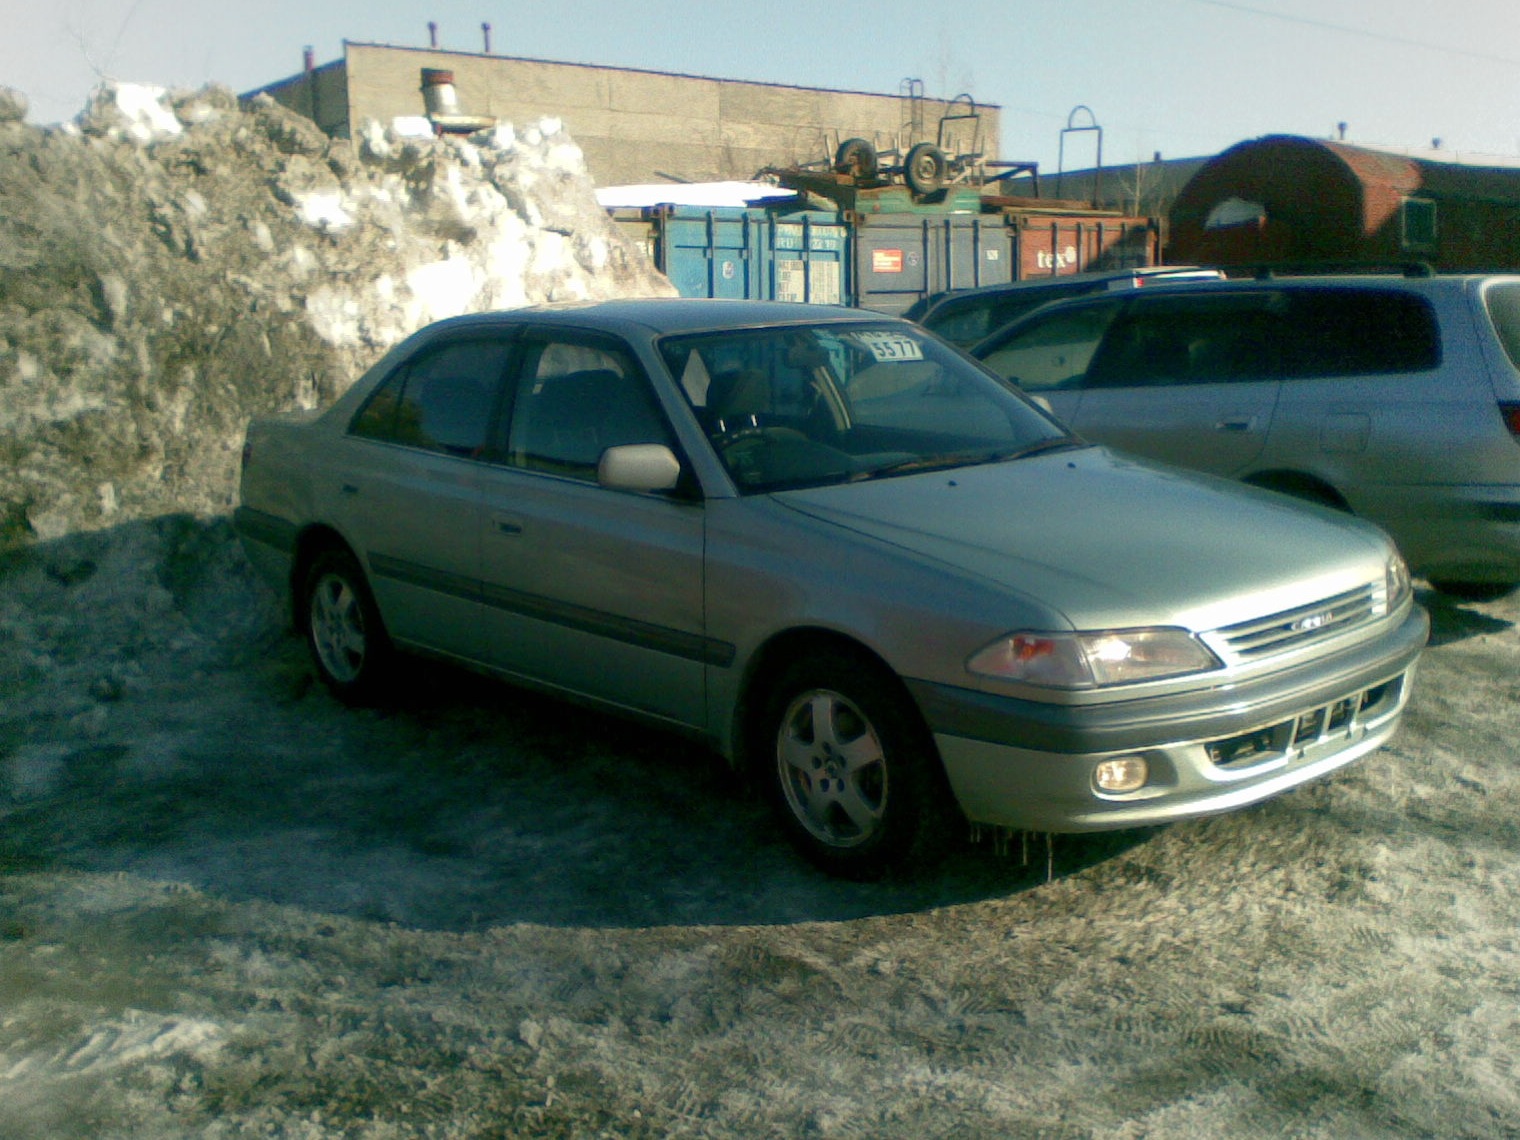 Washed - Toyota Carina 18 L 1996